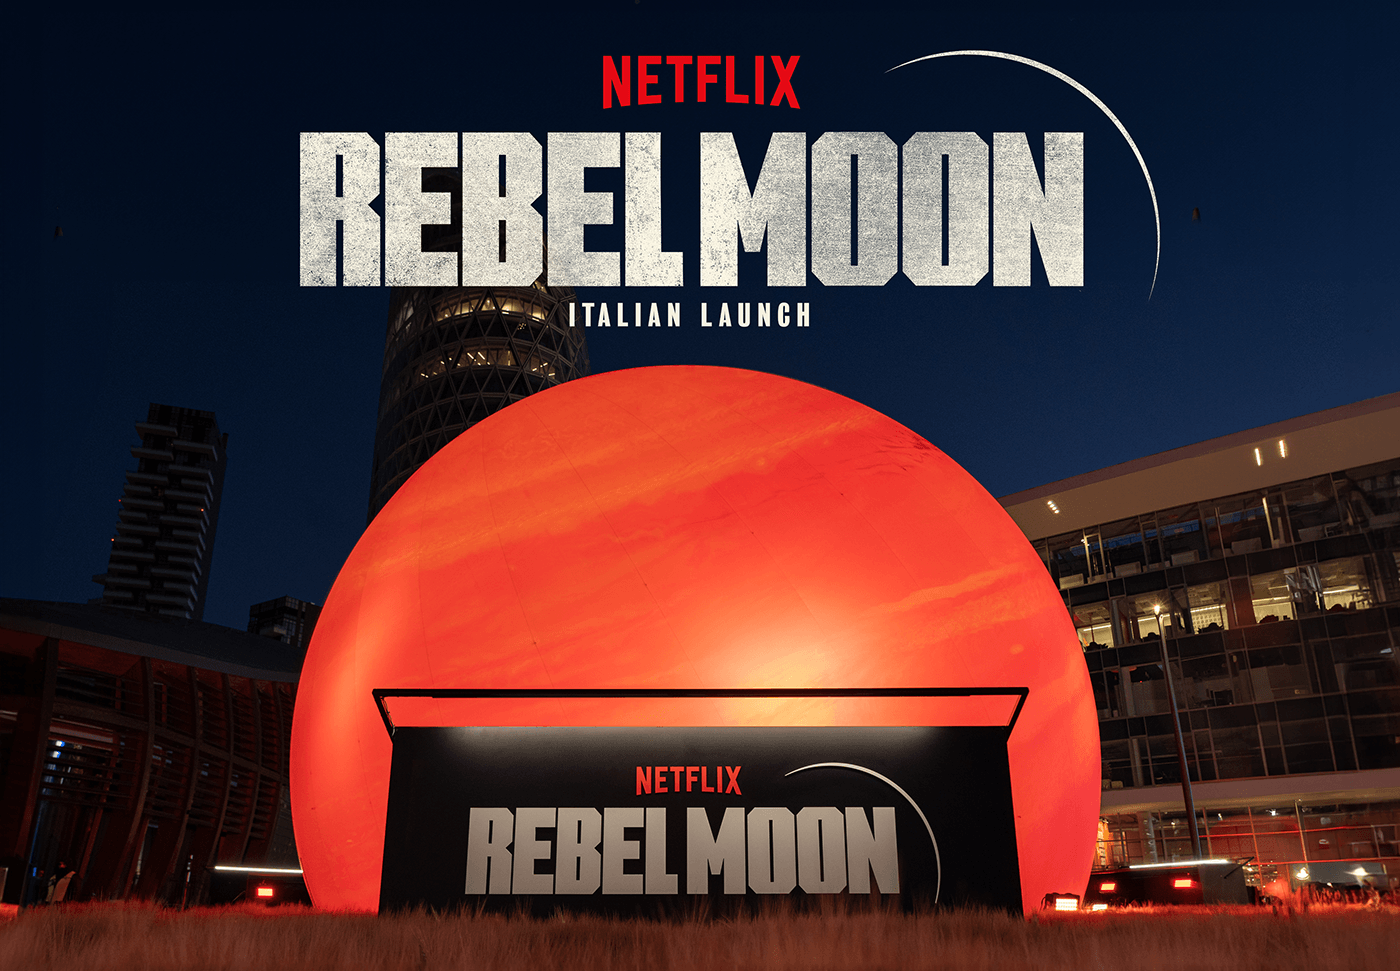 Netflix moon planet Space  rebels Netflix series activation Advertising  REBELMOON zacksnyder